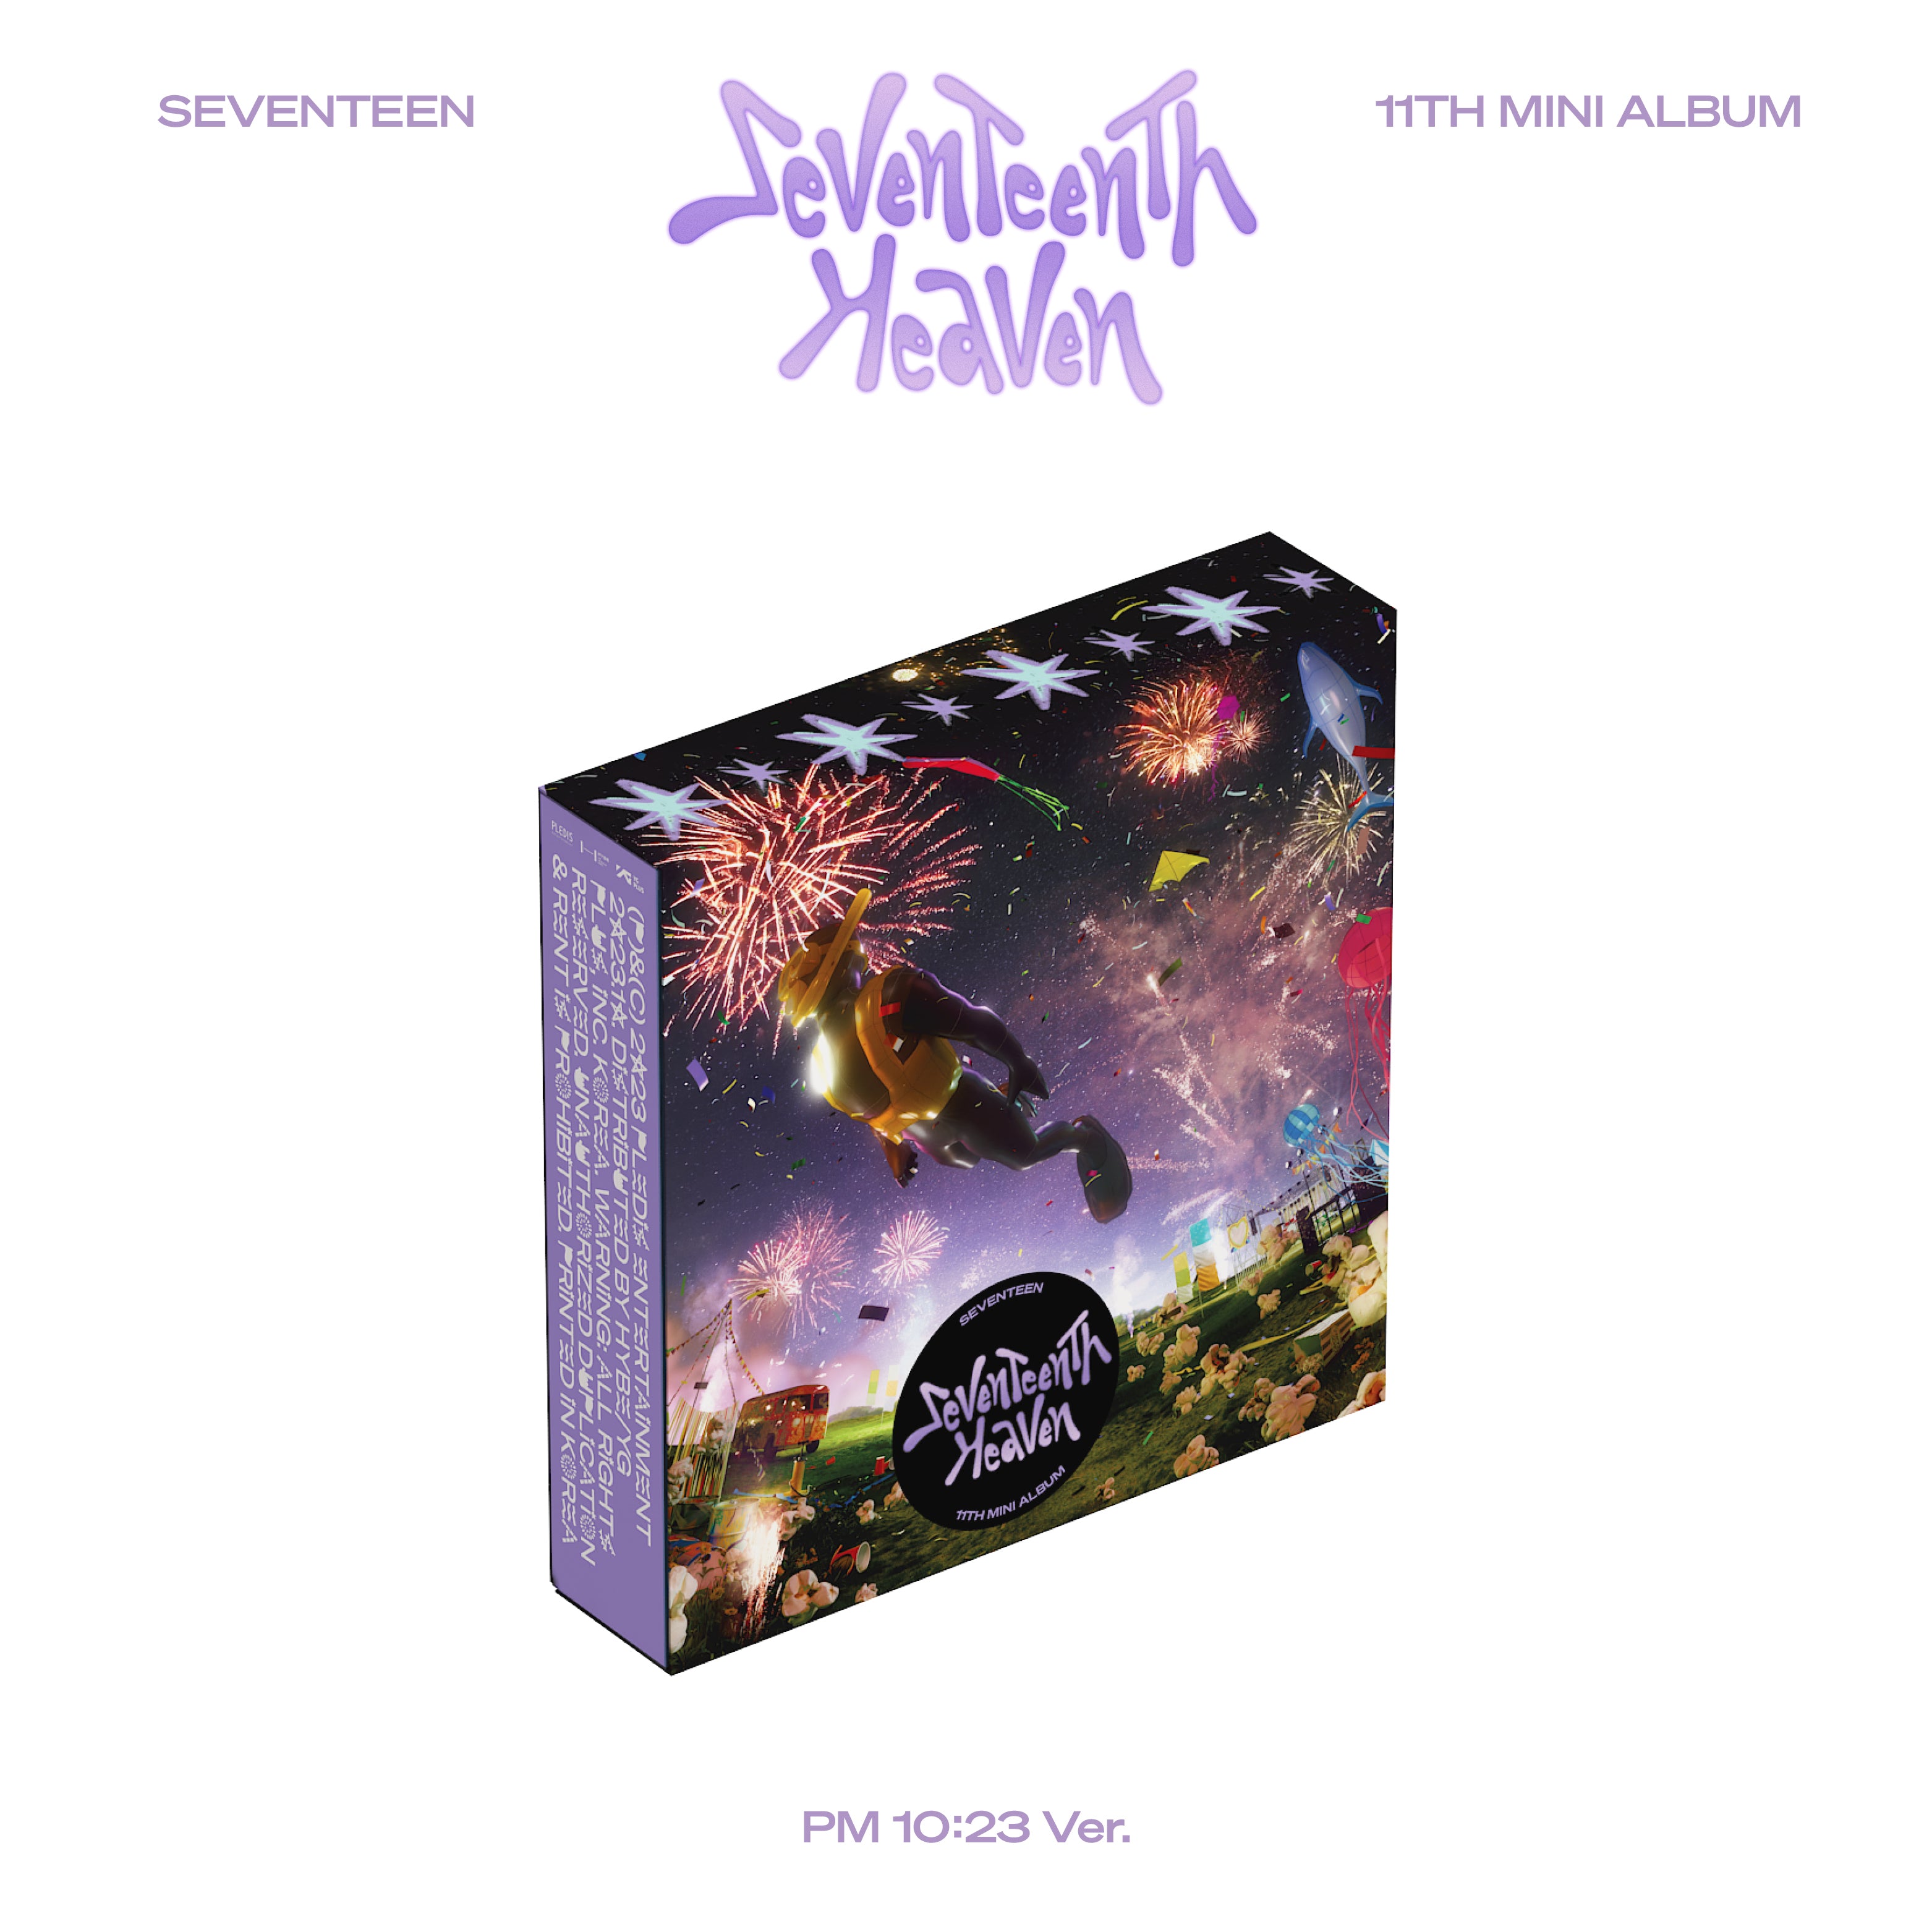 SEVENTEEN - Seventeenth Heaven (PM 2:14 Version): CD Box Set 